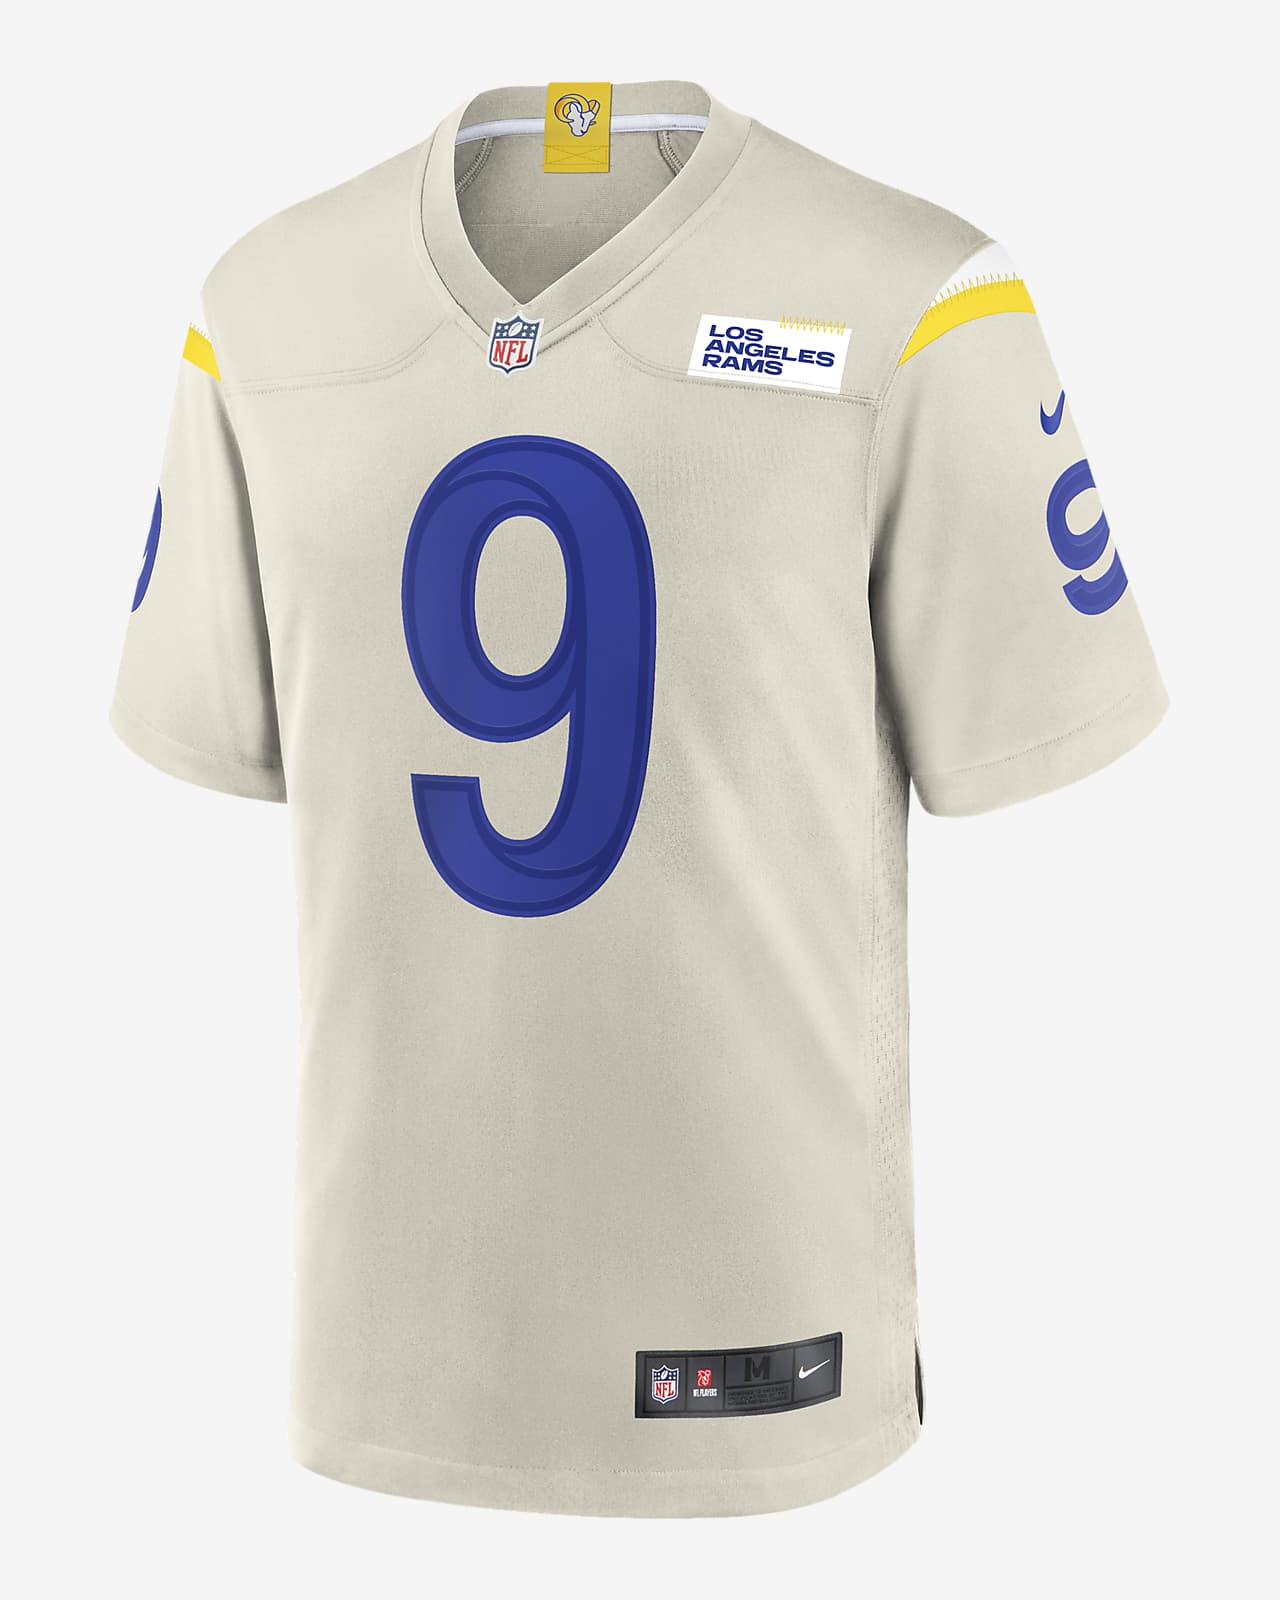 NFL Los Angeles Rams (Matthew Stafford) Men's Game Football Jersey